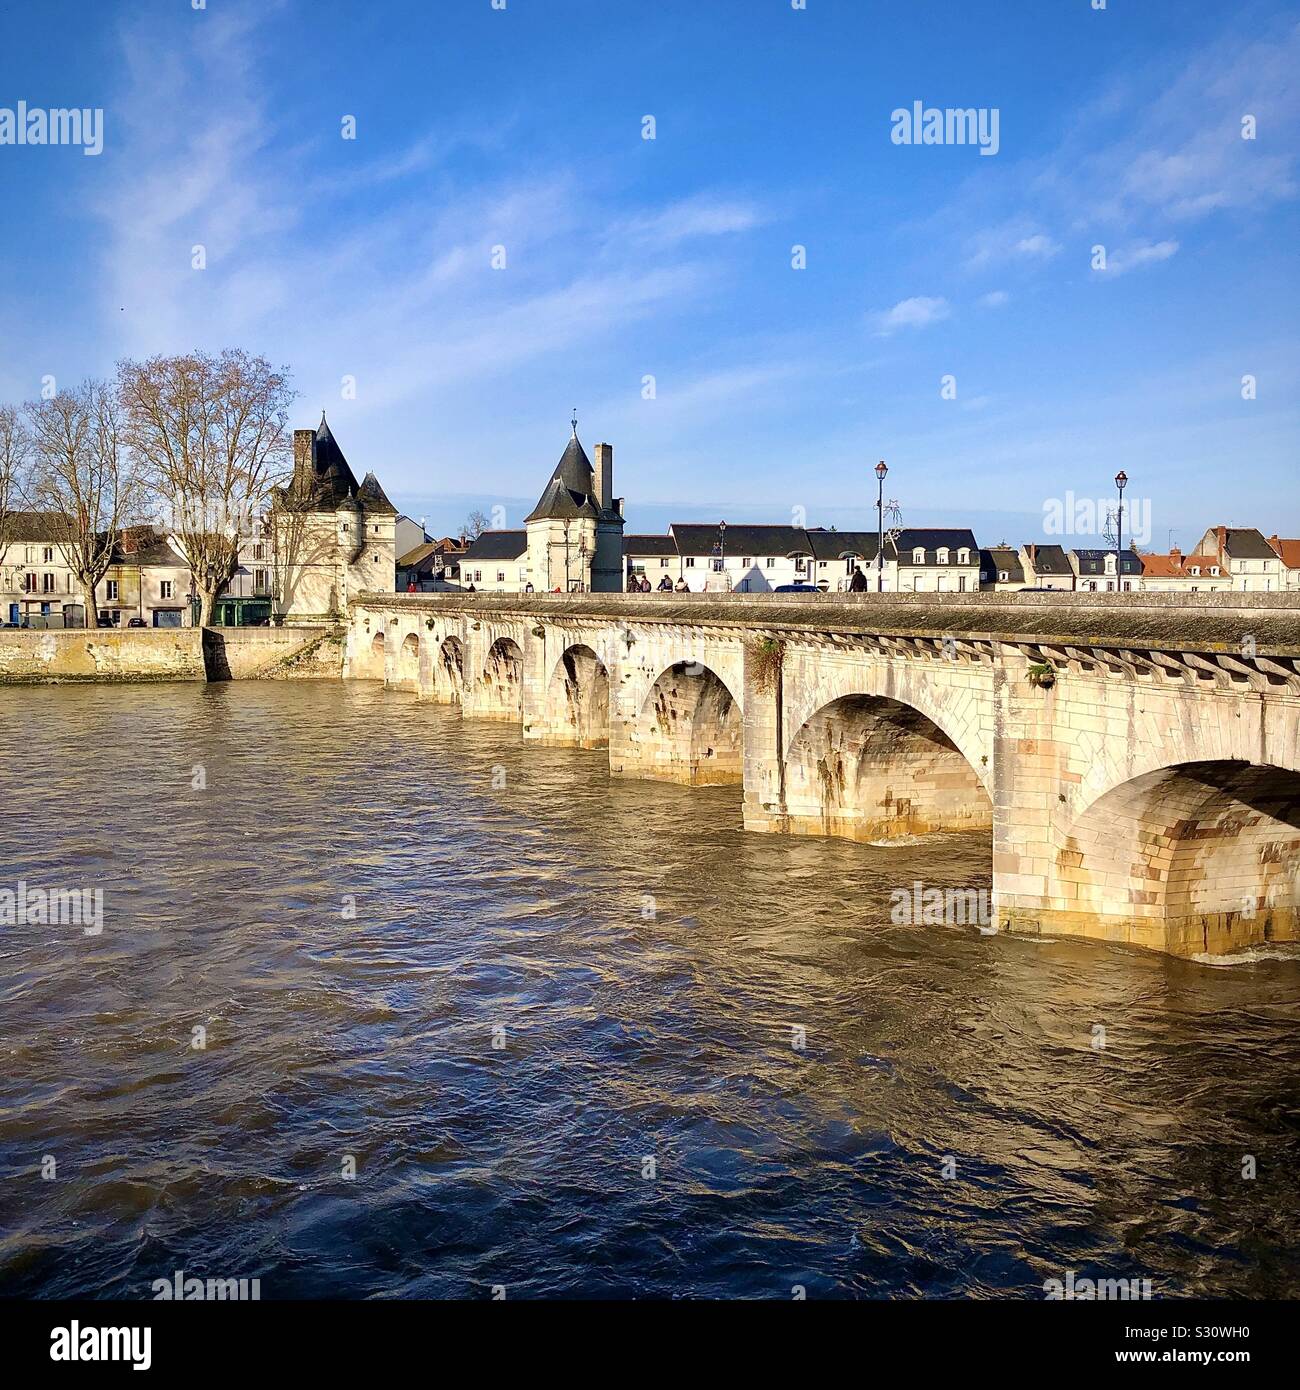 Early 17th century multi-arch stone bridge « Pont Henri IV » across the river Vienne, Chatellerault, France. Stock Photo